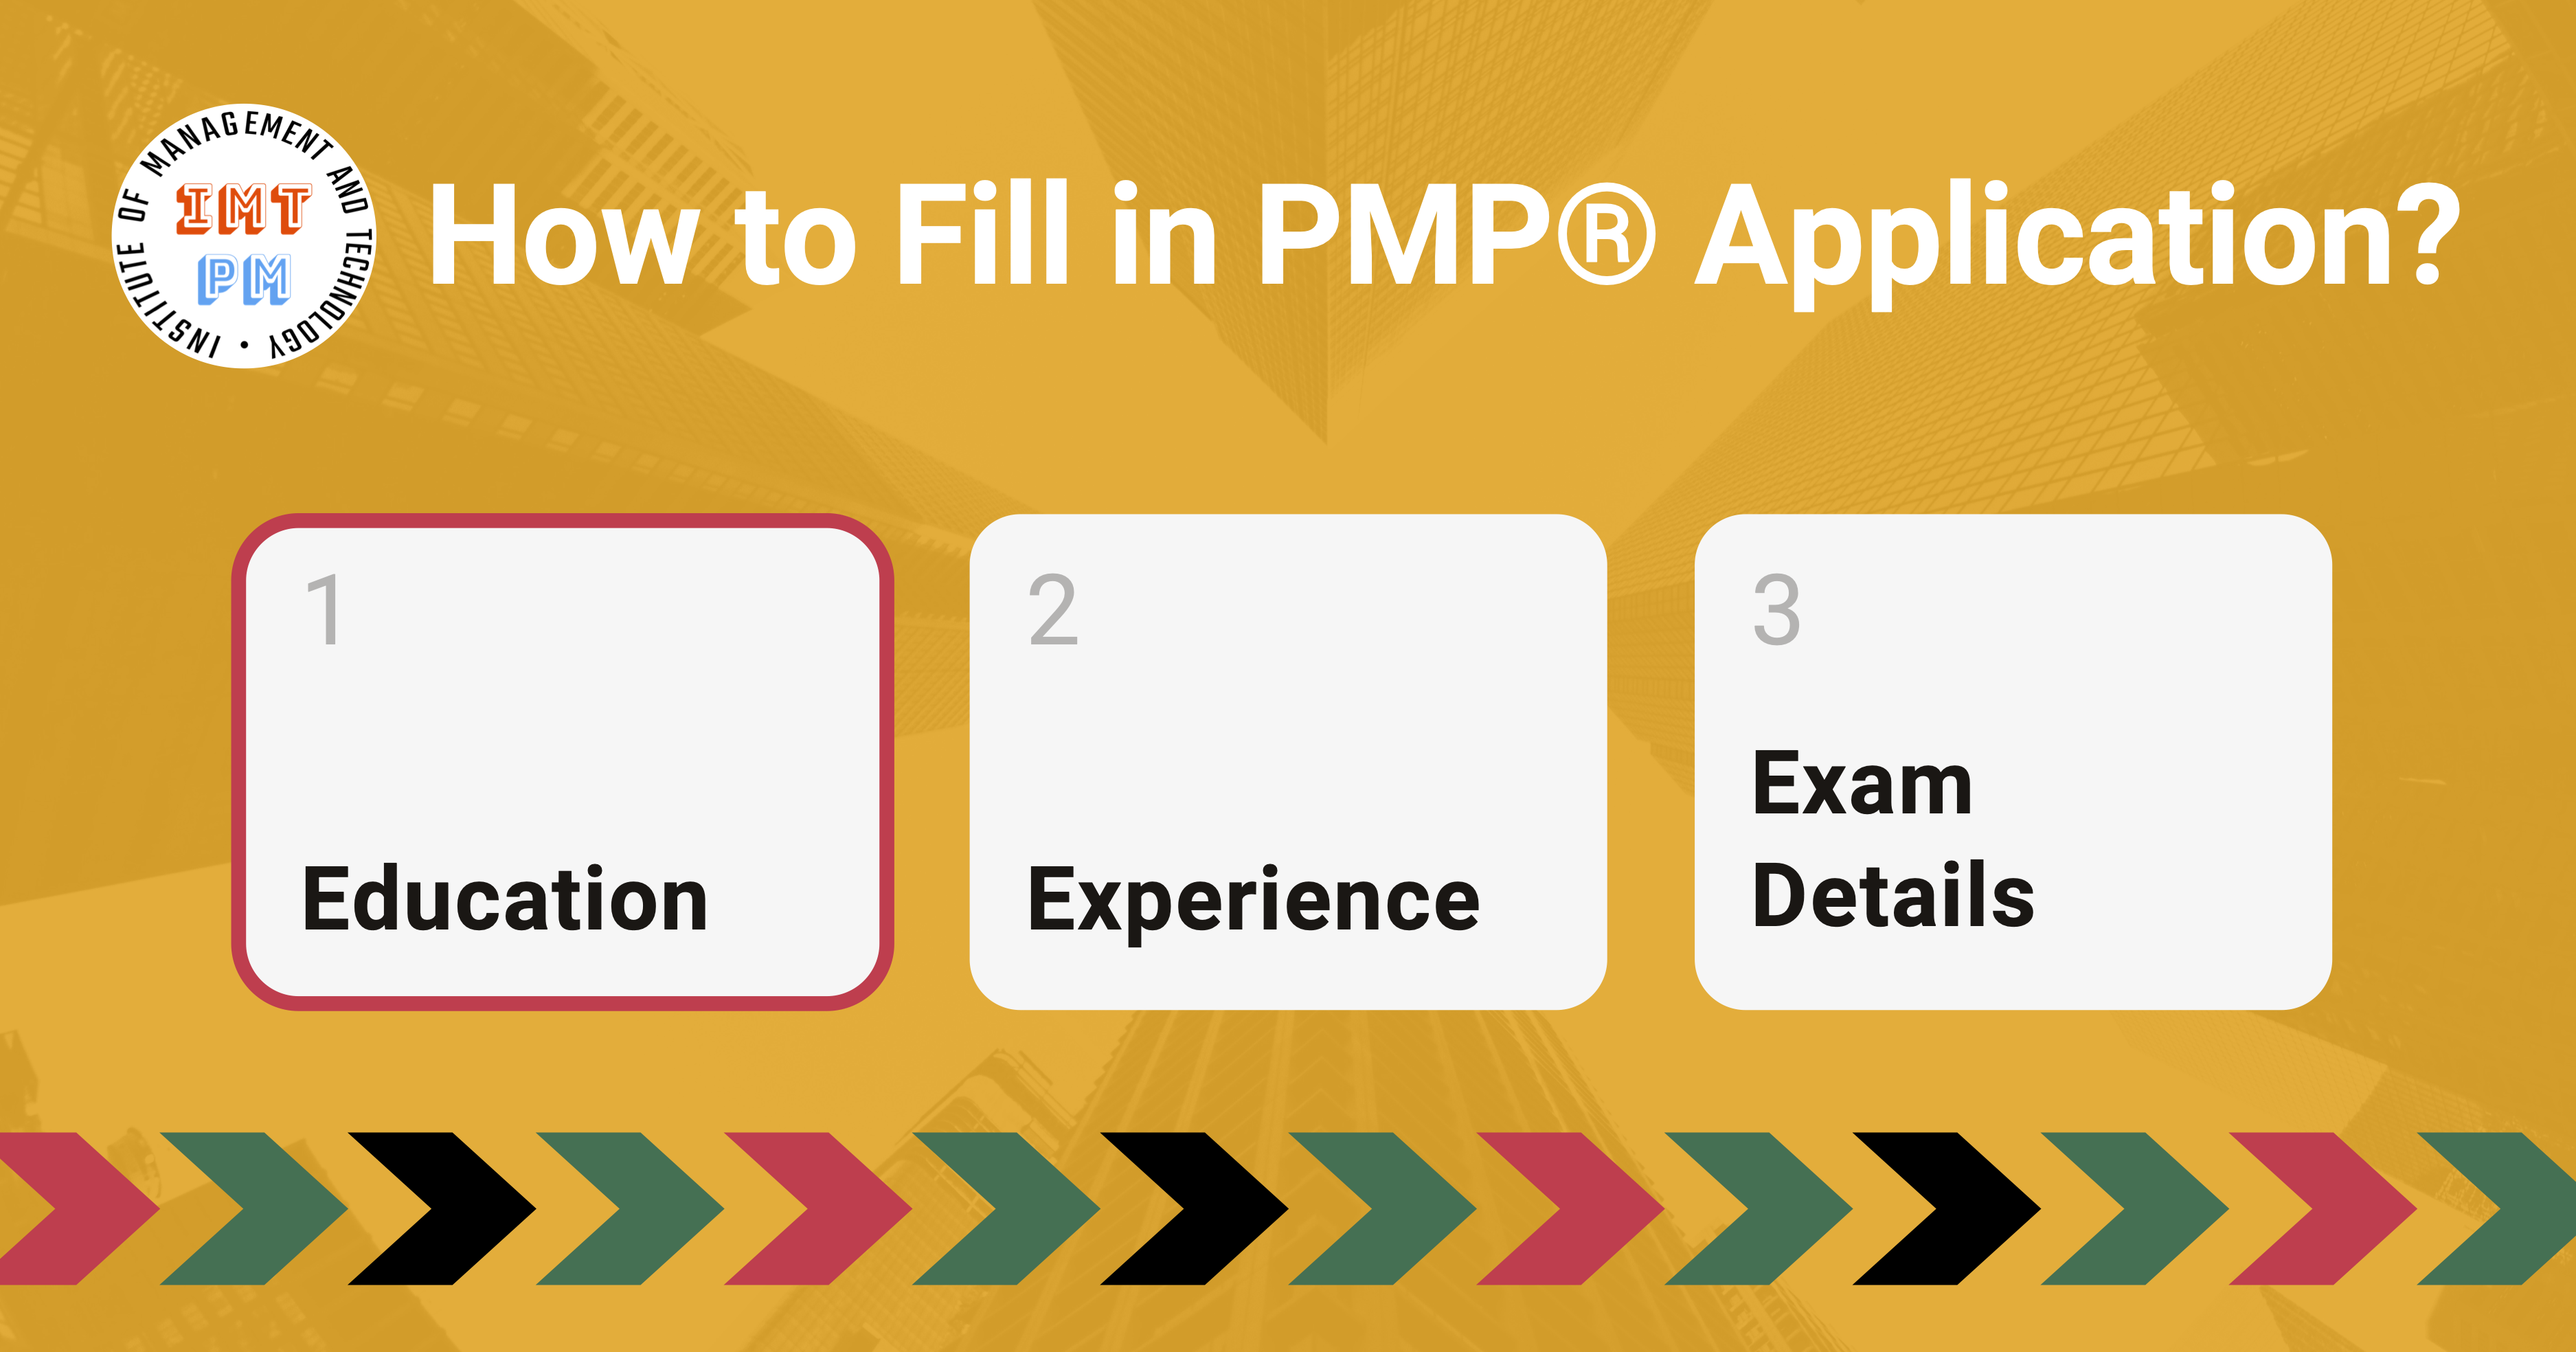 35-pdus-pmp-exam-prep-discipline-agile-dasm-dassm-how-to-fill-in-PMP-application-education